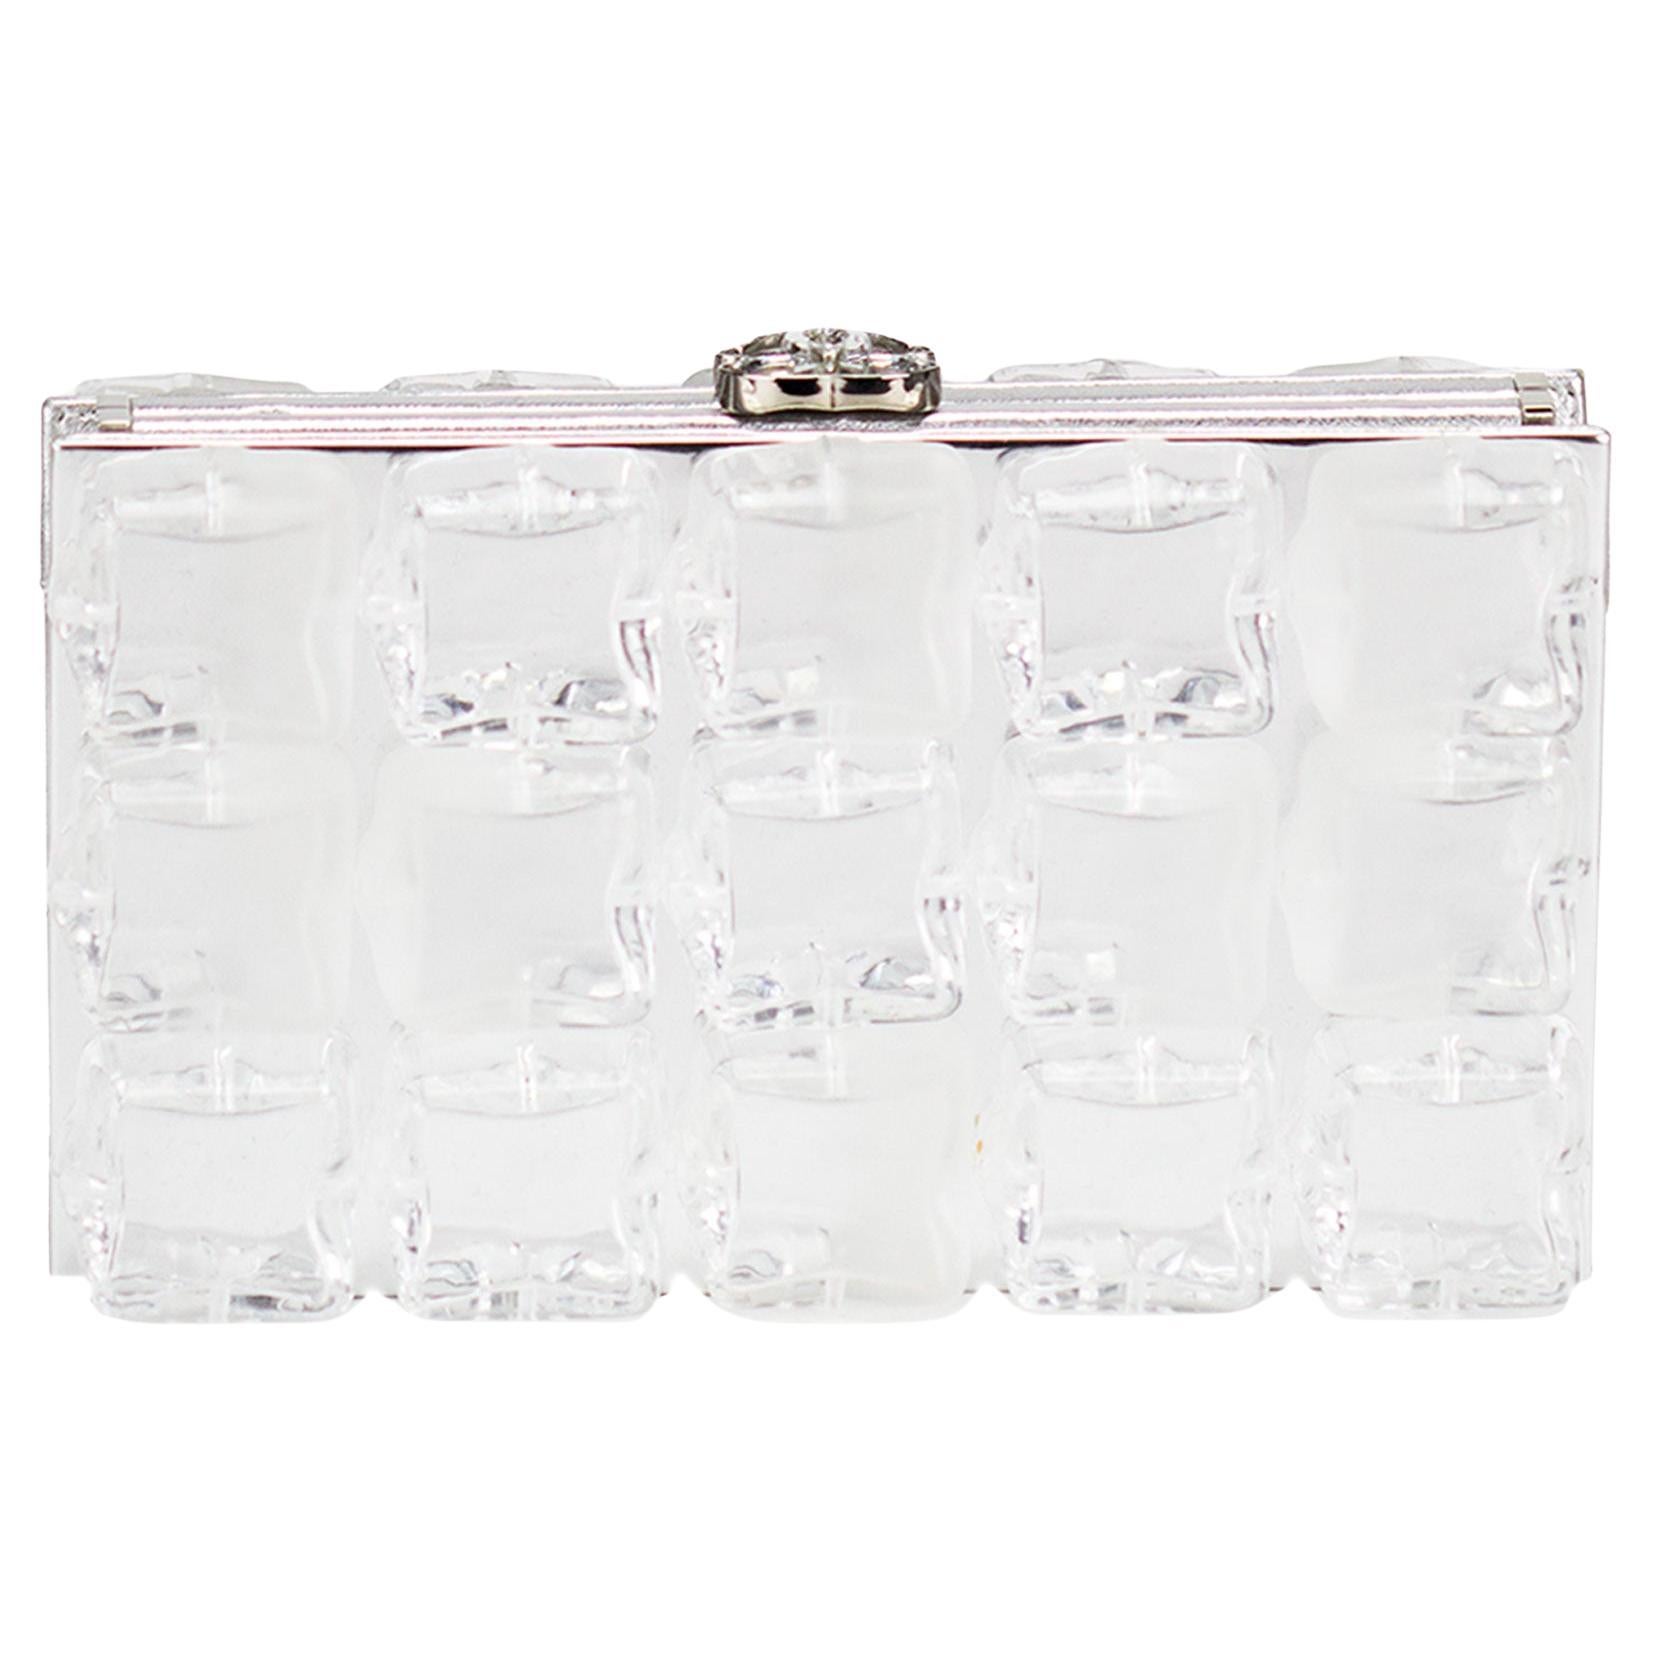 Chanel Rare Limited Edition Ice Cube Minaudière Silver Plexiglass Clutch